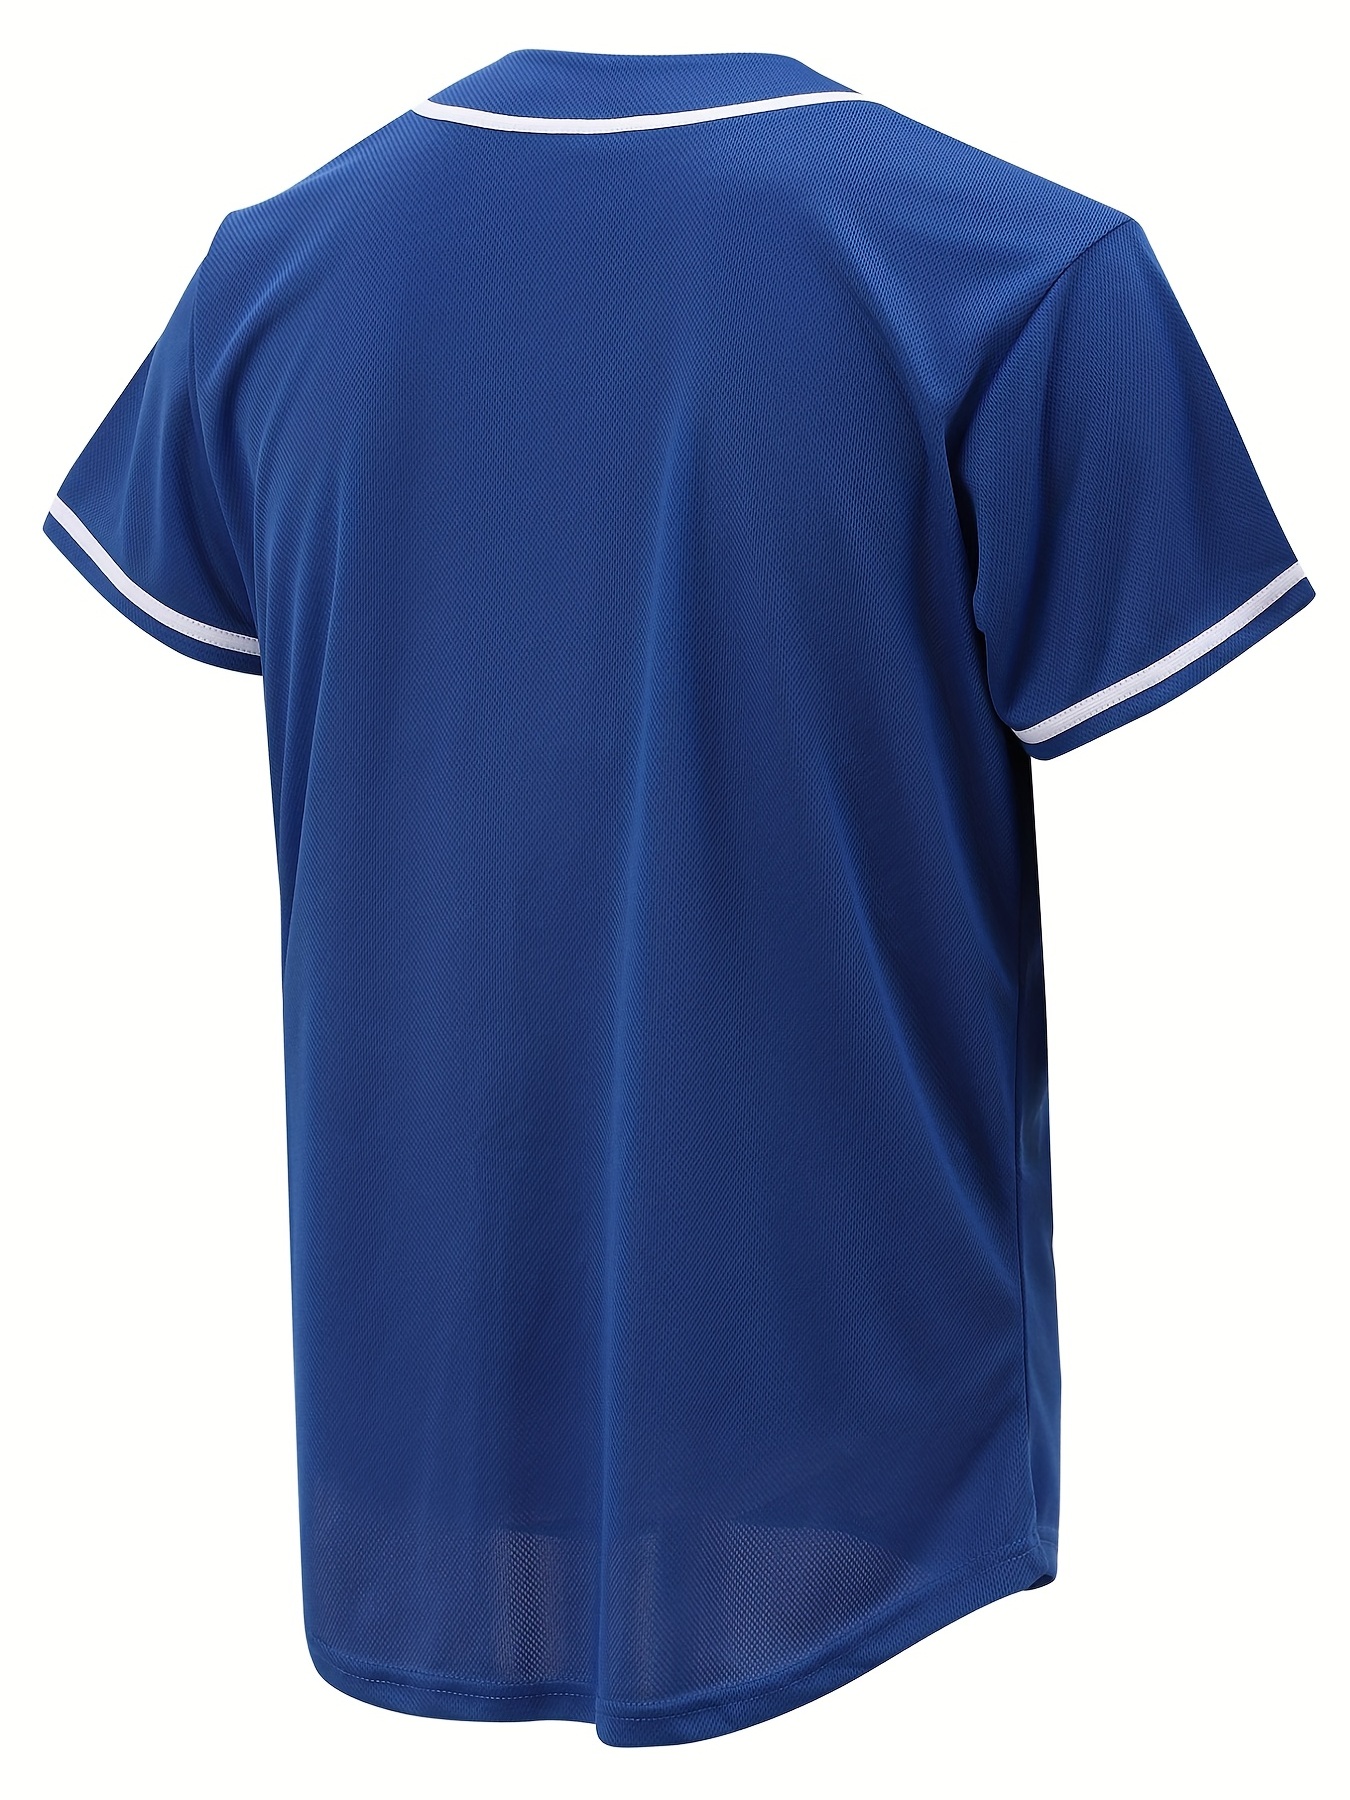  Camiseta de béisbol para hombre, camisetas lisas con botones,  manga corta, hip hop, hipster, uniformes deportivos de equipo activo,  tallas S-XXXL, Azul : Ropa, Zapatos y Joyería